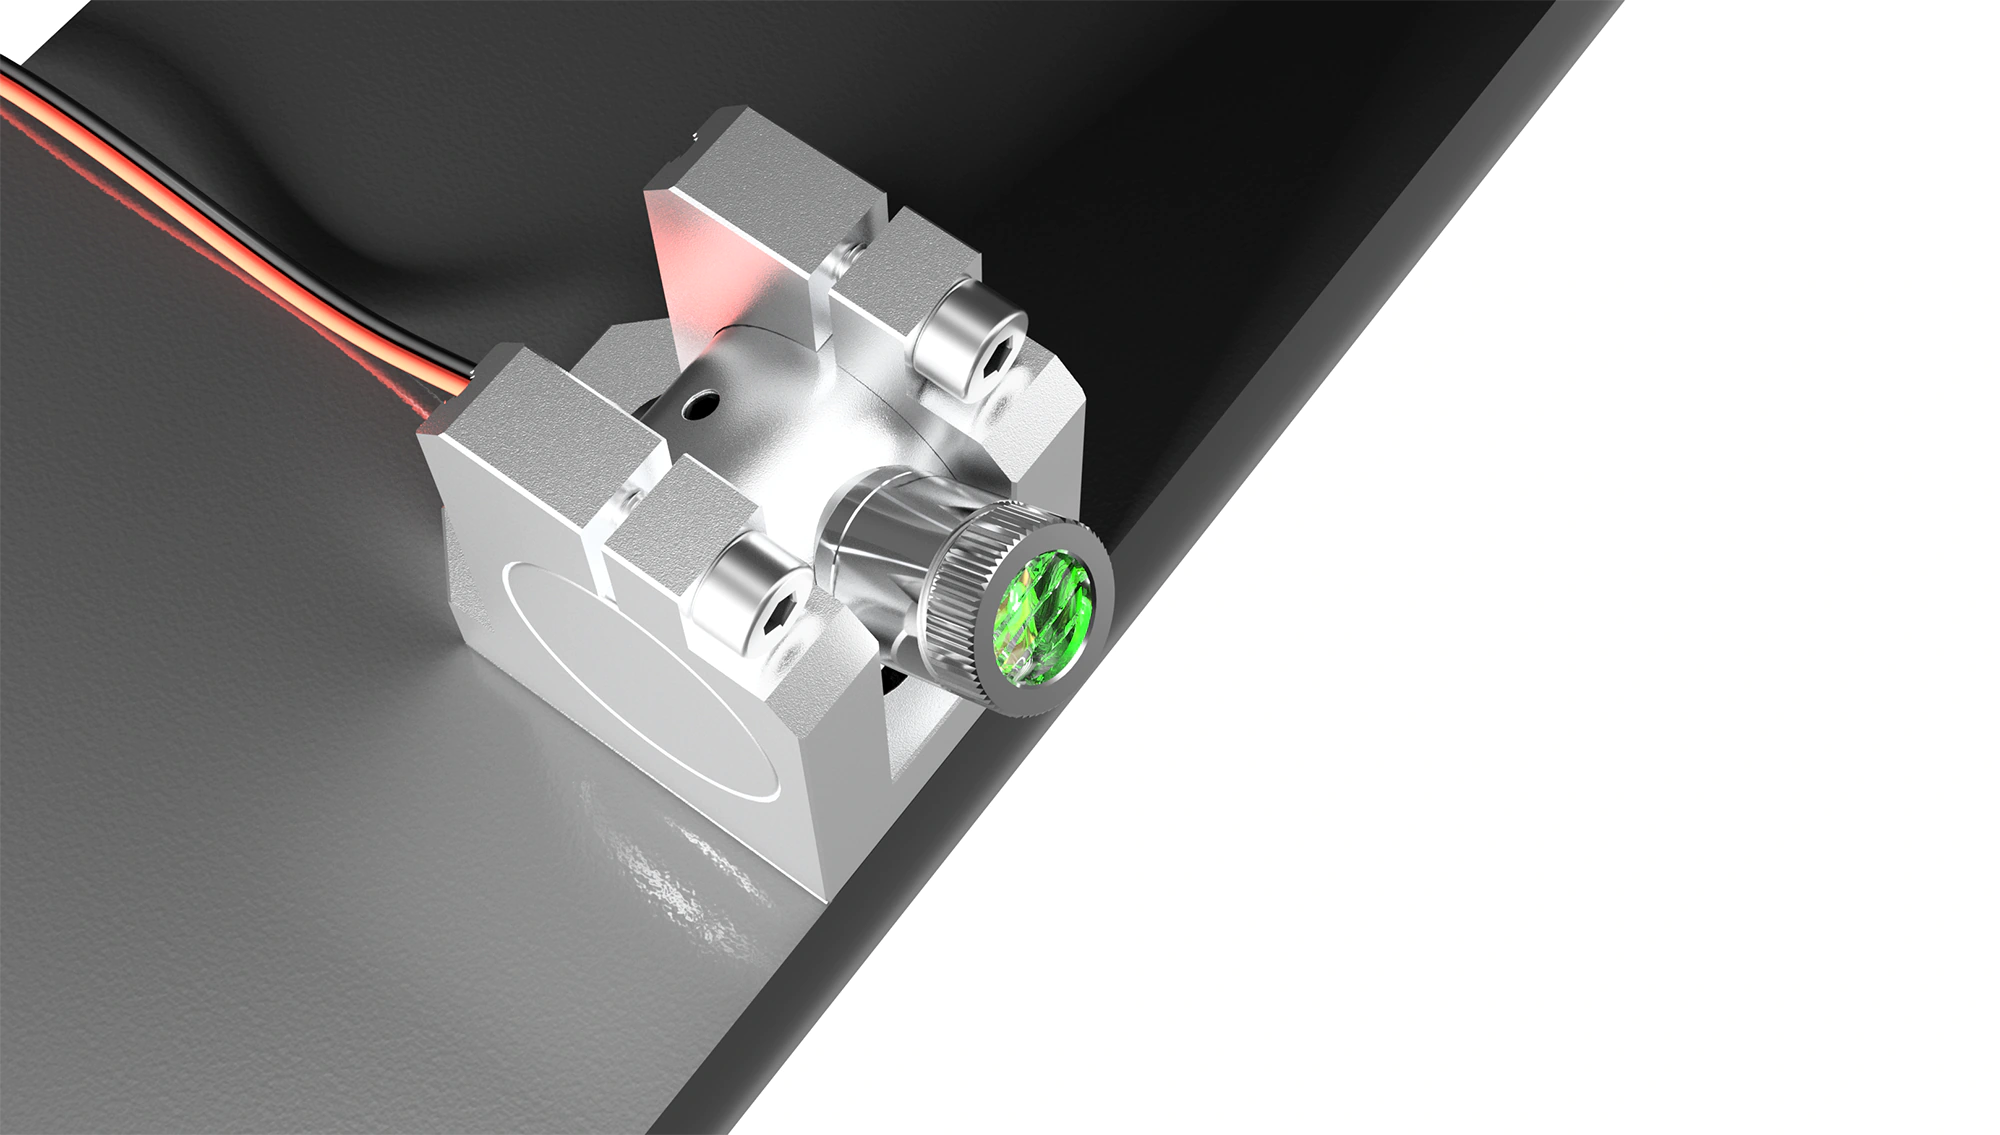 Pointeur laser vert linéaire 10mW 520nm oche – MM Workshop